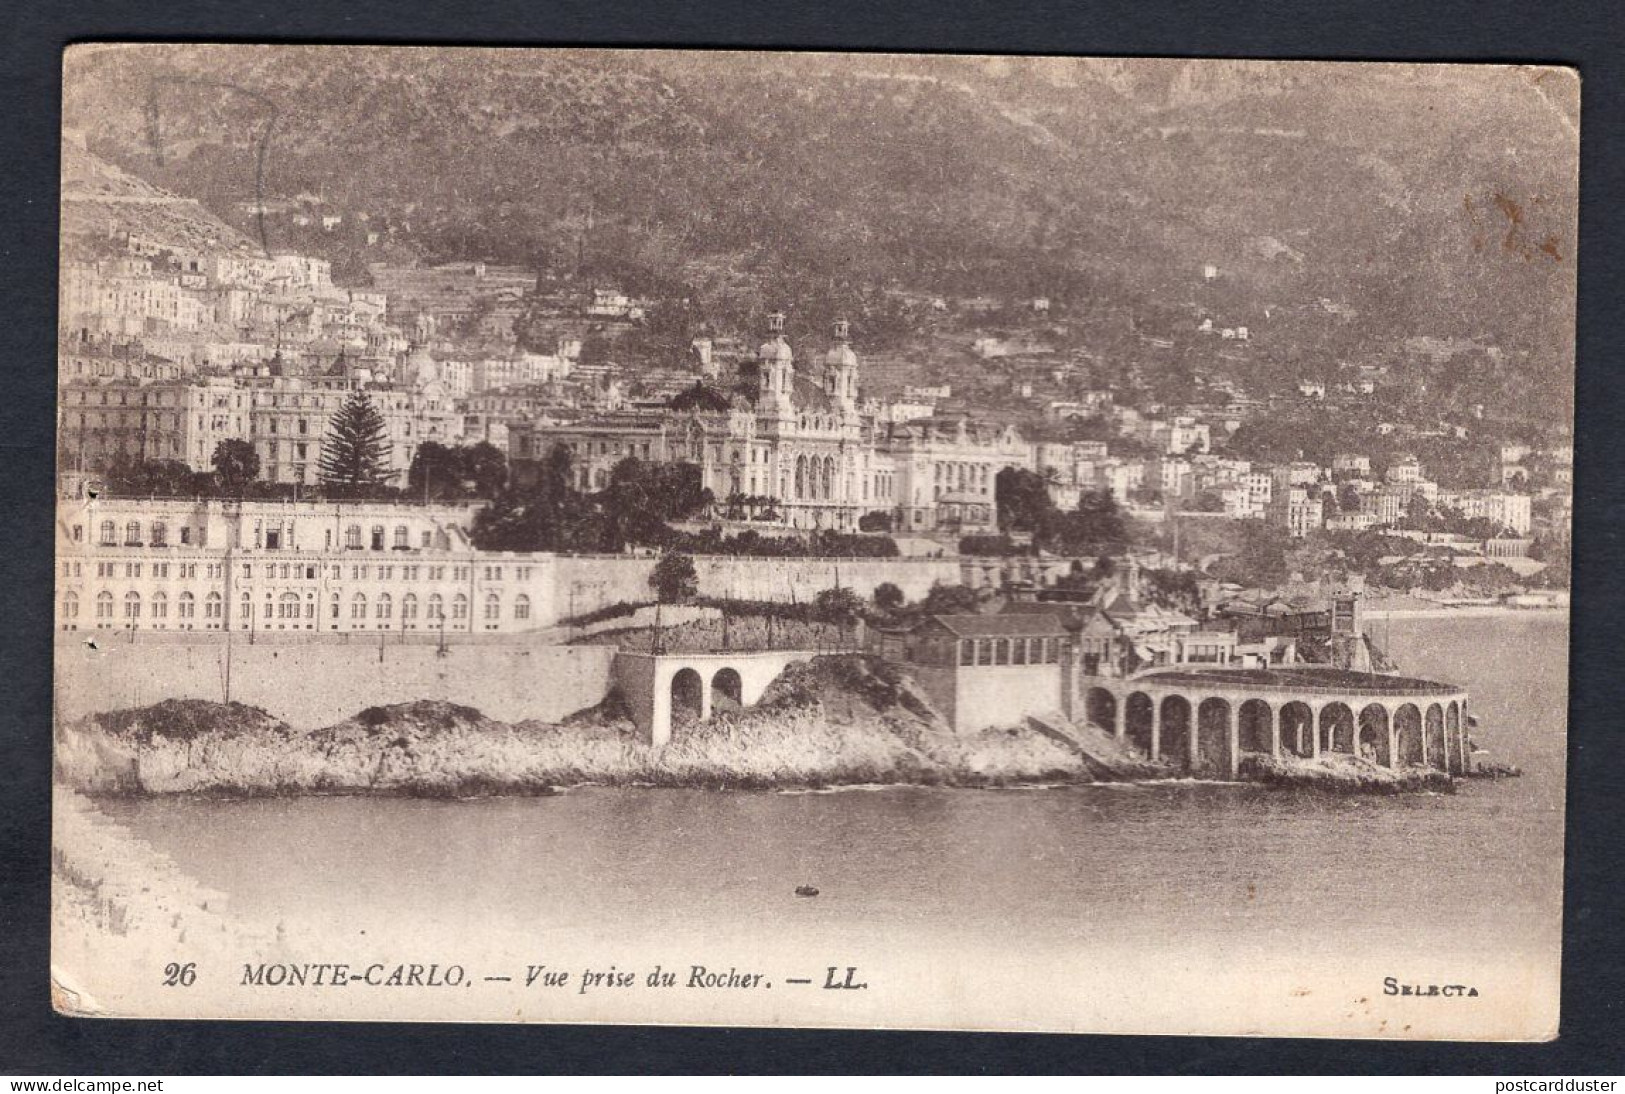 USA WW1 Military 1916 AEF APO 721,Censored Postcard To Brooklyn. Monaco Monte Carlo (h3047) - Lettres & Documents